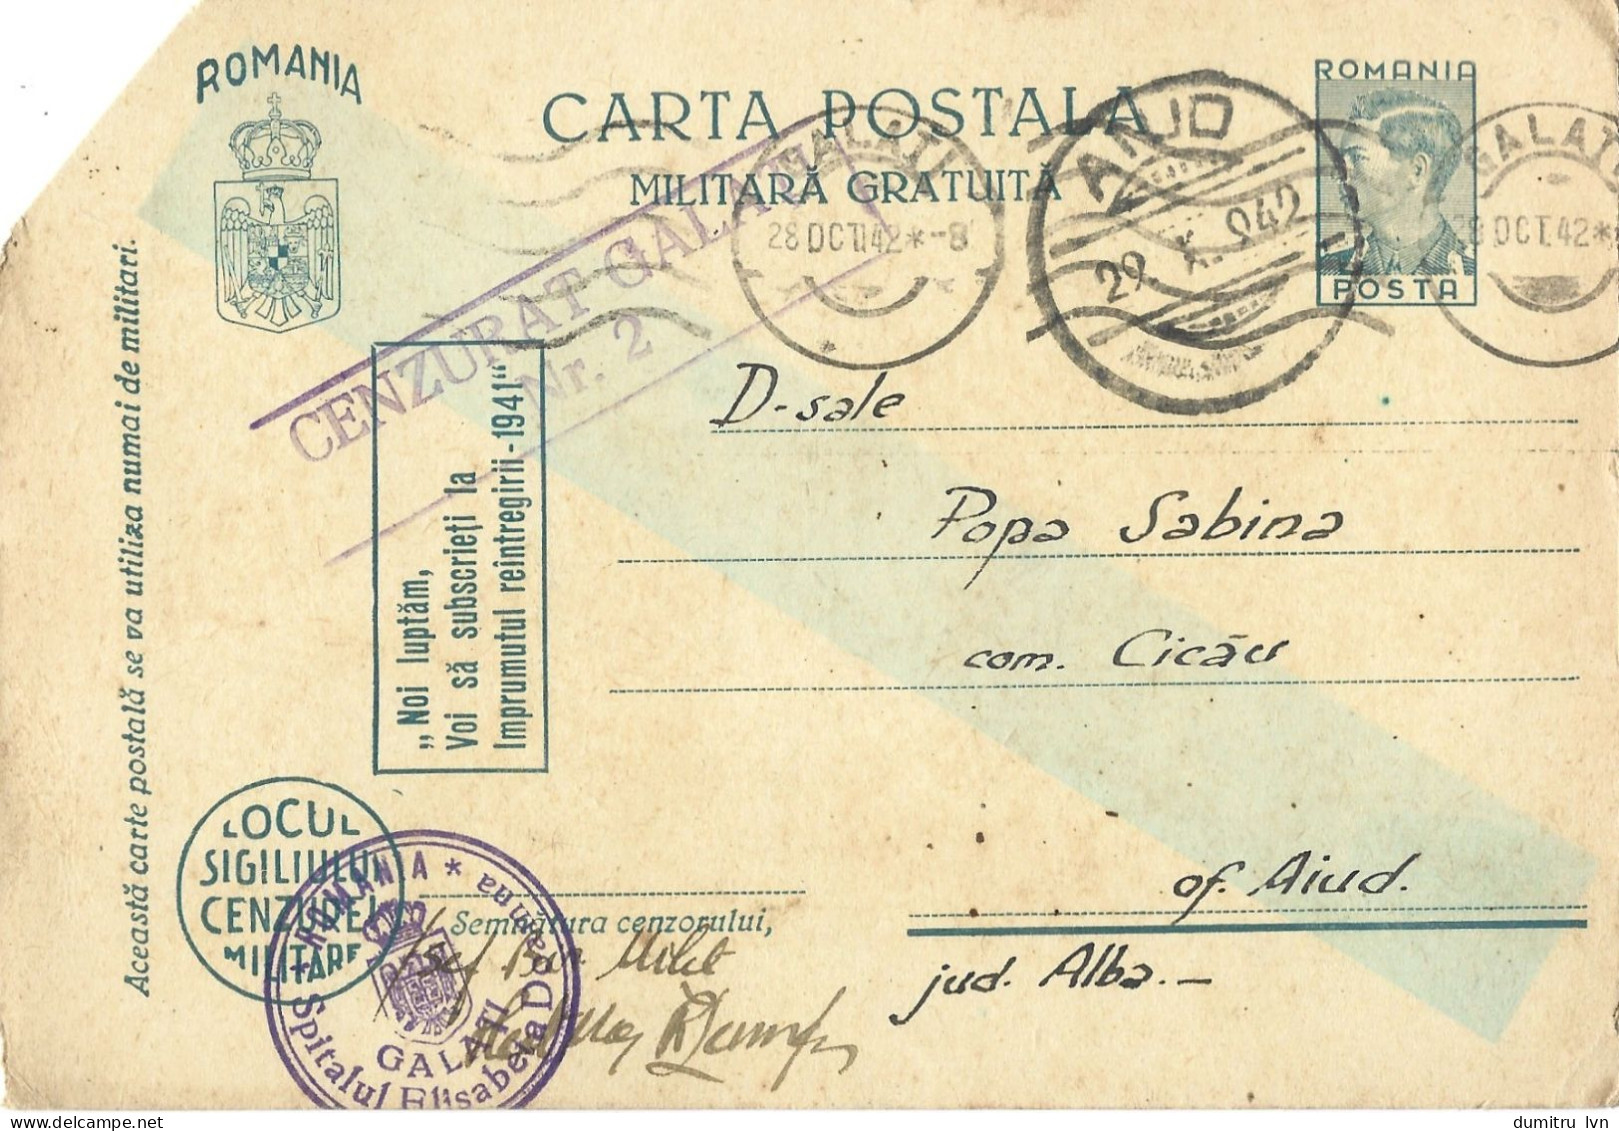 ROMANIA 1942 FREE MILITARY POSTCARD, CENSORED GALATI Nr.2, SPITALUL ELISABETA DOAMNA STAMP, POSTCARD STATIONERY - World War 2 Letters